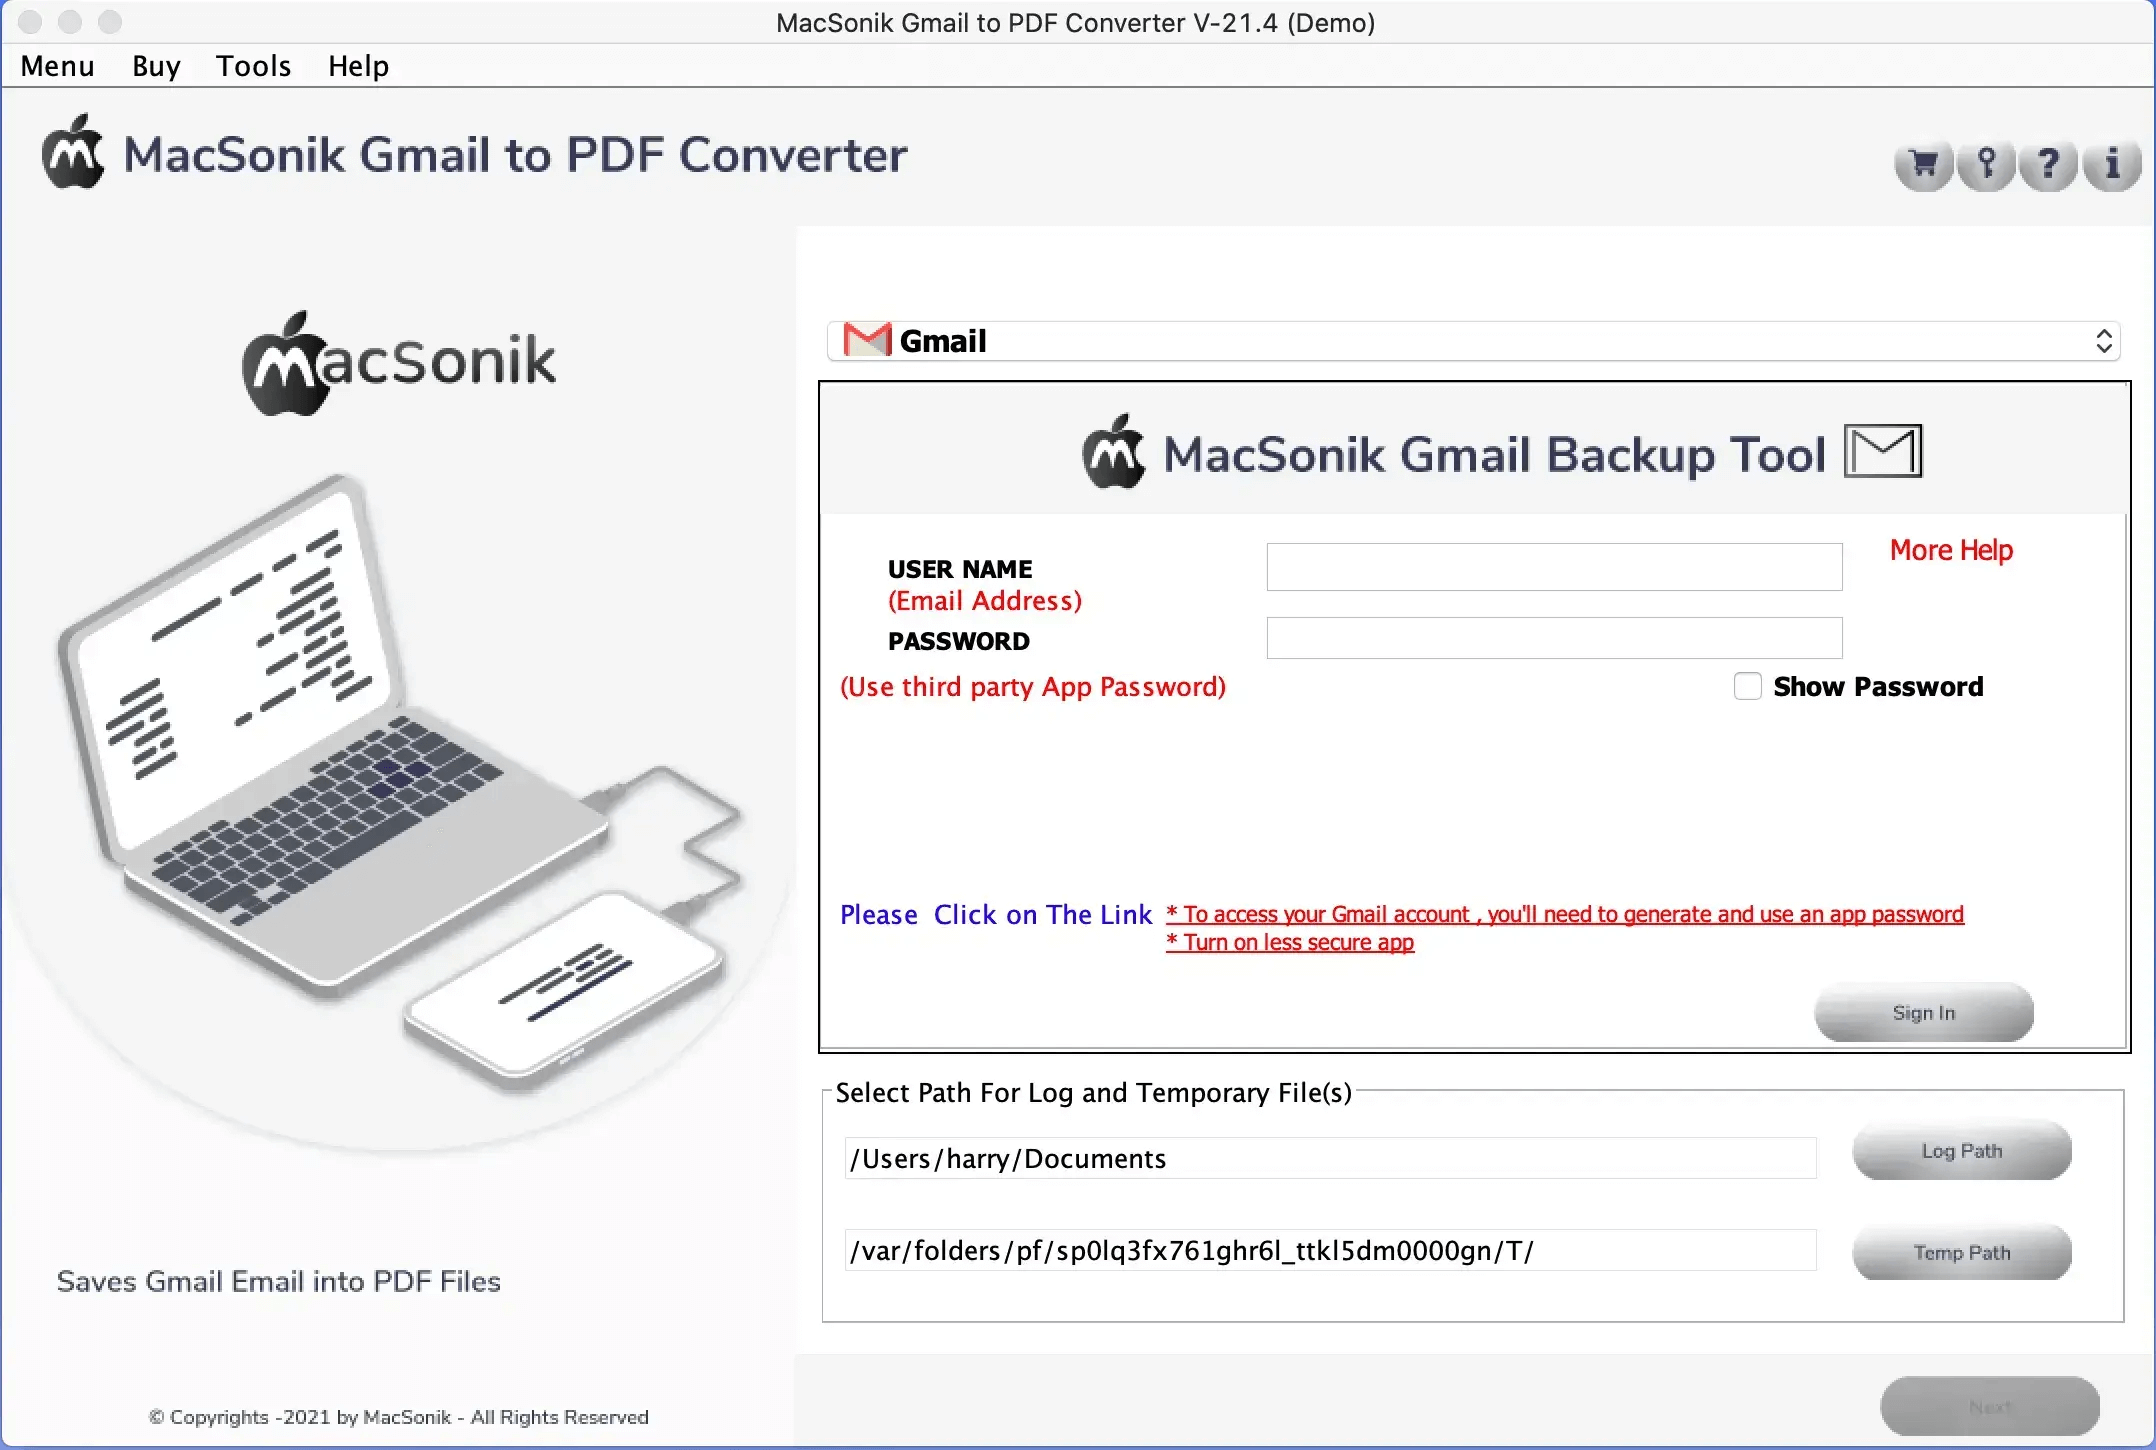 Gmail to PDF Converter for Mac 21.4 : Main Window